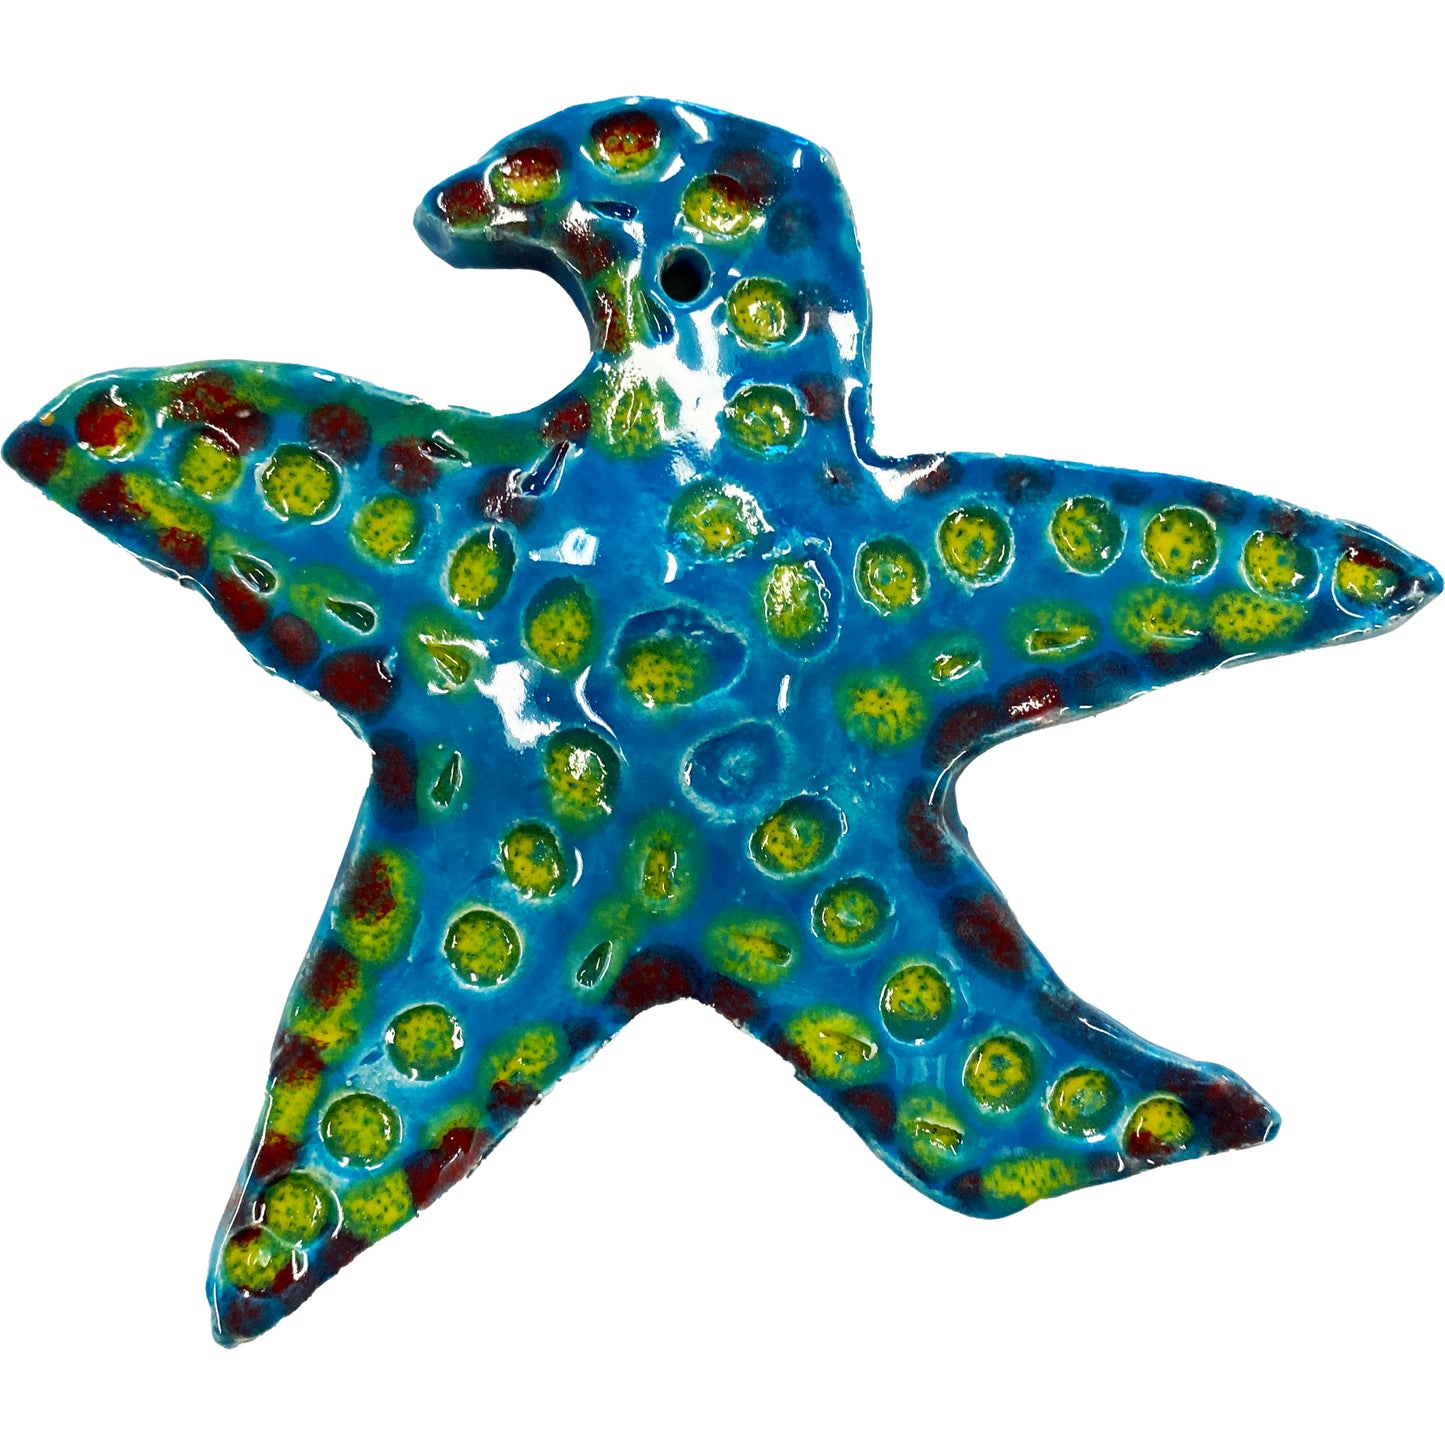 Ceramic Arts Handmade Clay Crafts Fresh Fish Glazed Starfish 6-inch x 5-inch made by Loreen Bartschi and Ryan Pinder